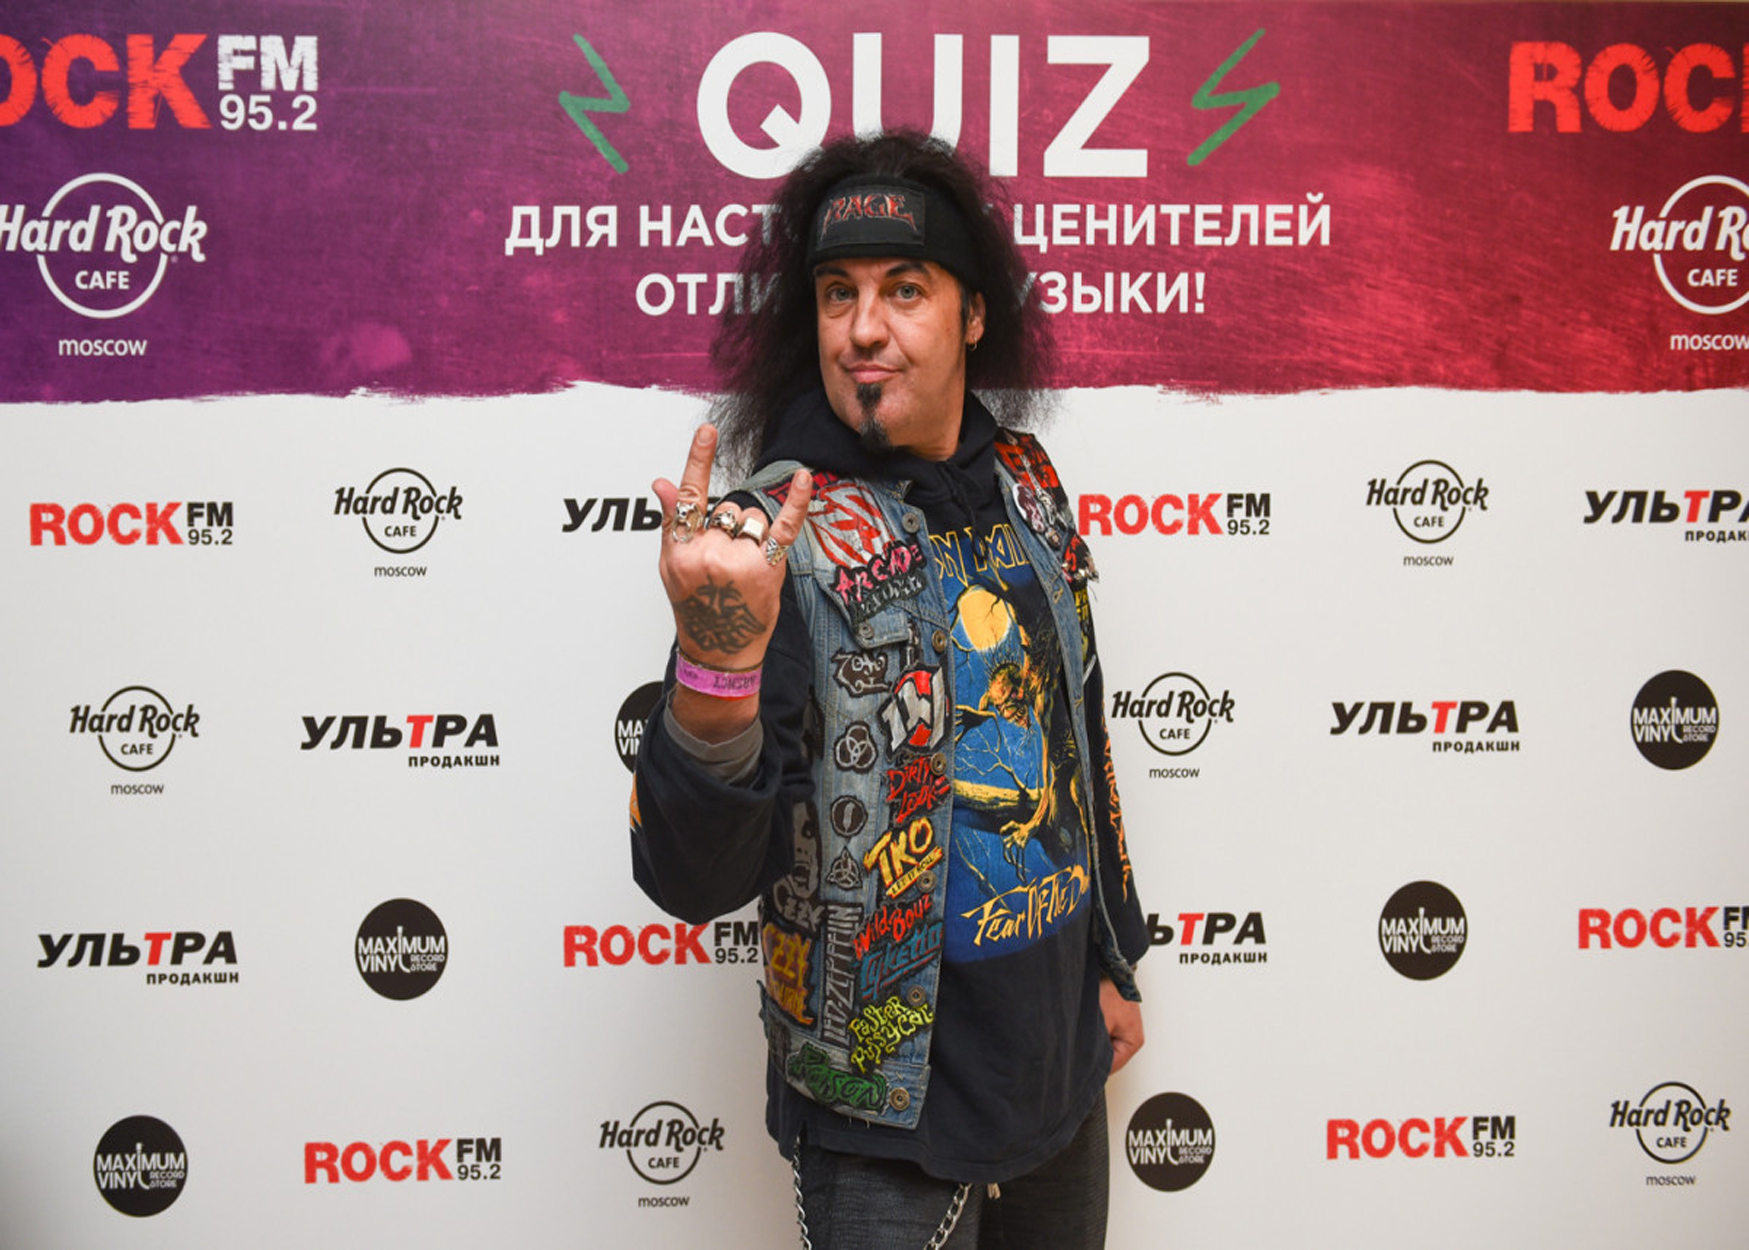 Рок ФМ. Программы рок ФМ. Рок ФМ волна в Санкт-Петербурге. Rock fm 102.0. Эфир радио рок фм